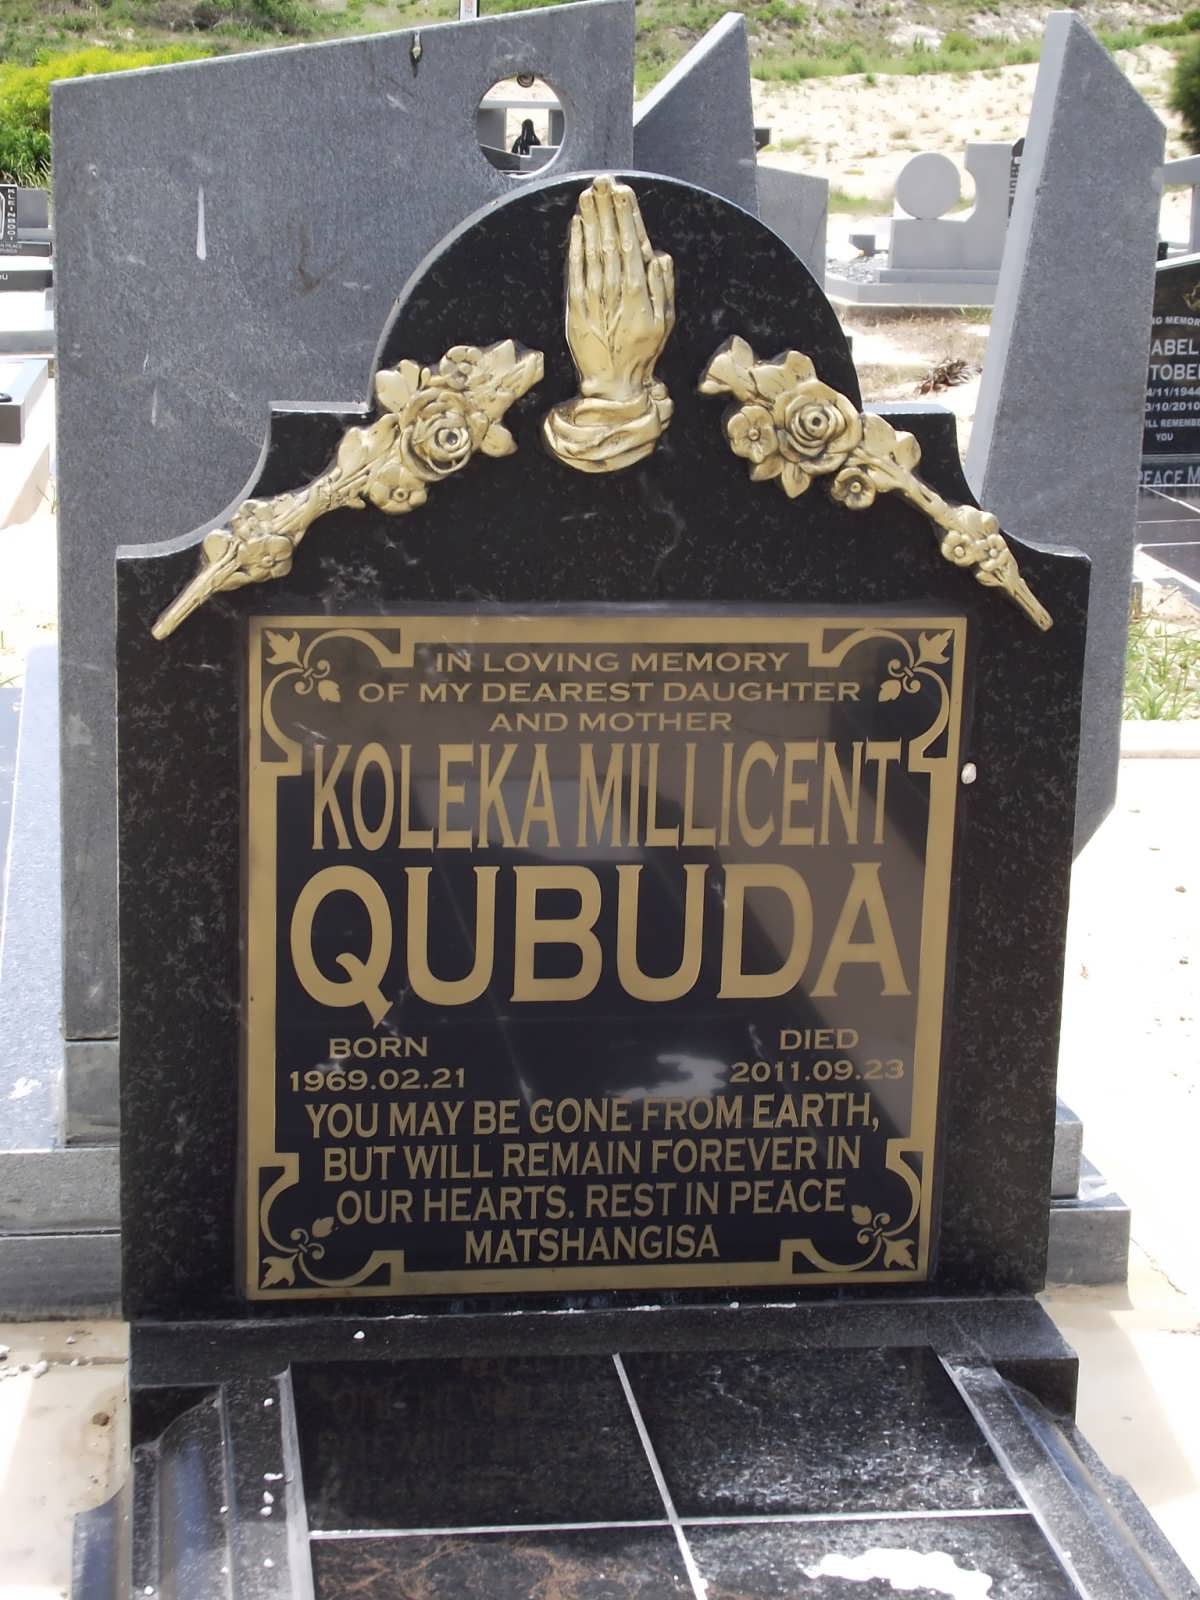 QUBUDA Koleka Millicent 1969-2011